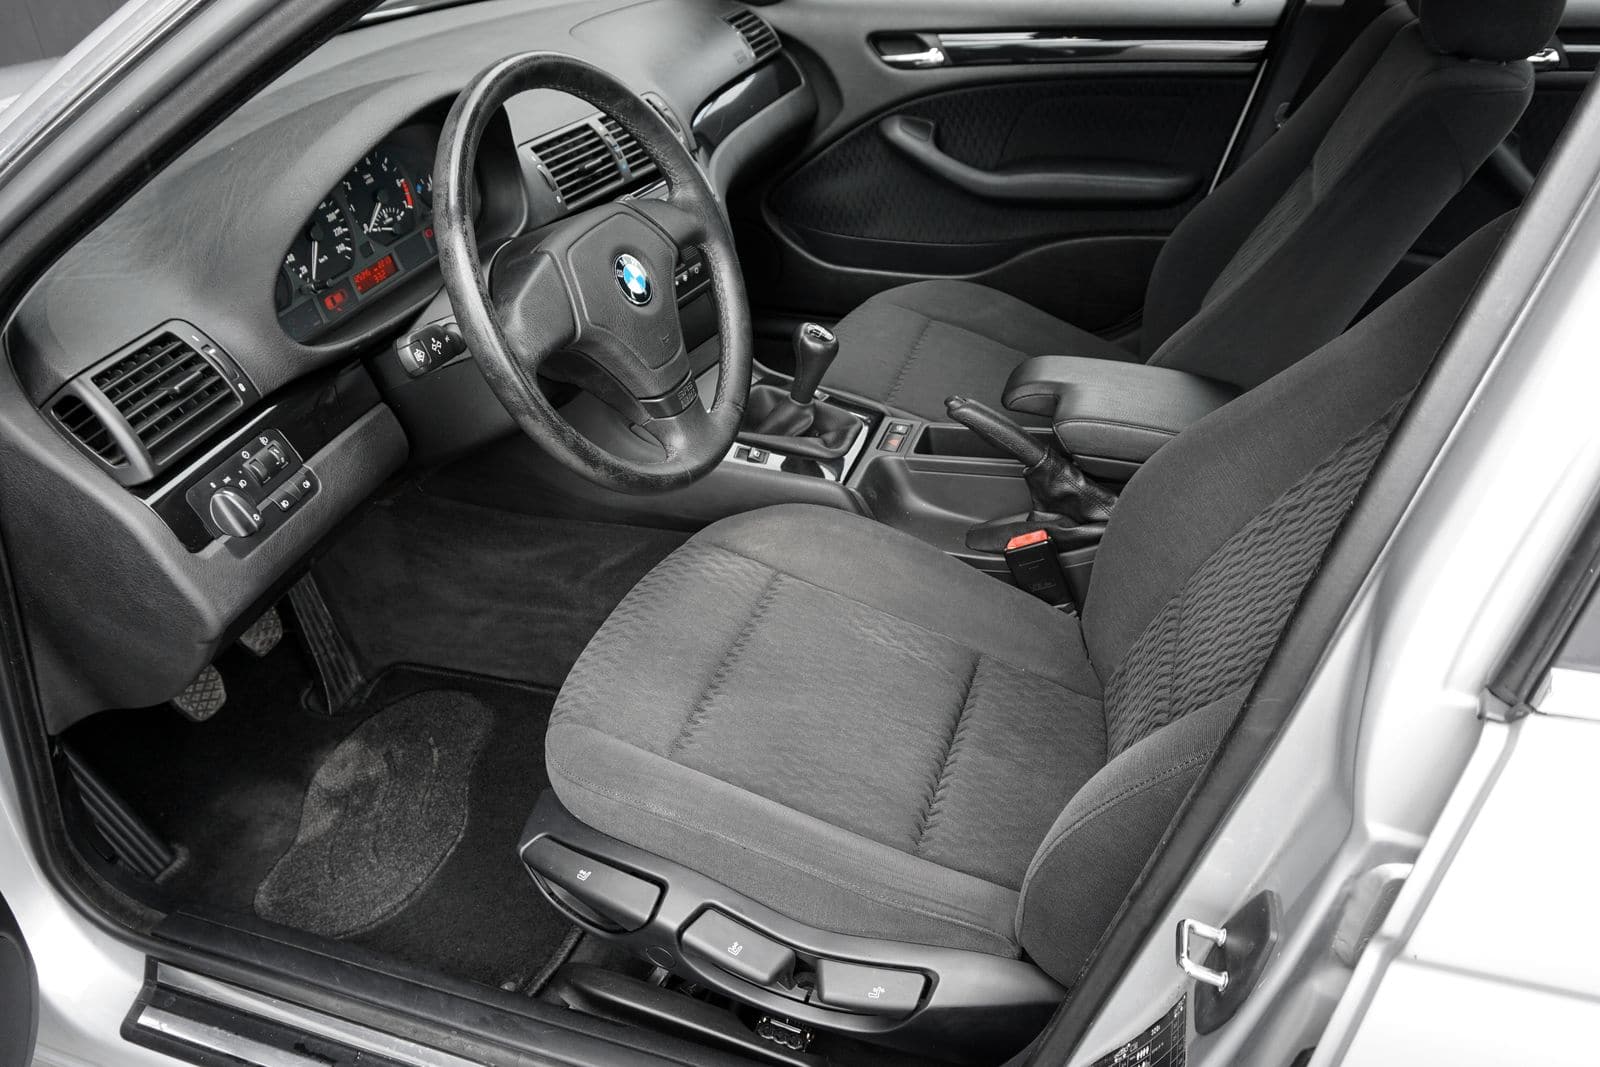 BMW 320i (E46) 2.0 150 Cv état collection Occasion 79 abcautofrance (abc auto france) 12